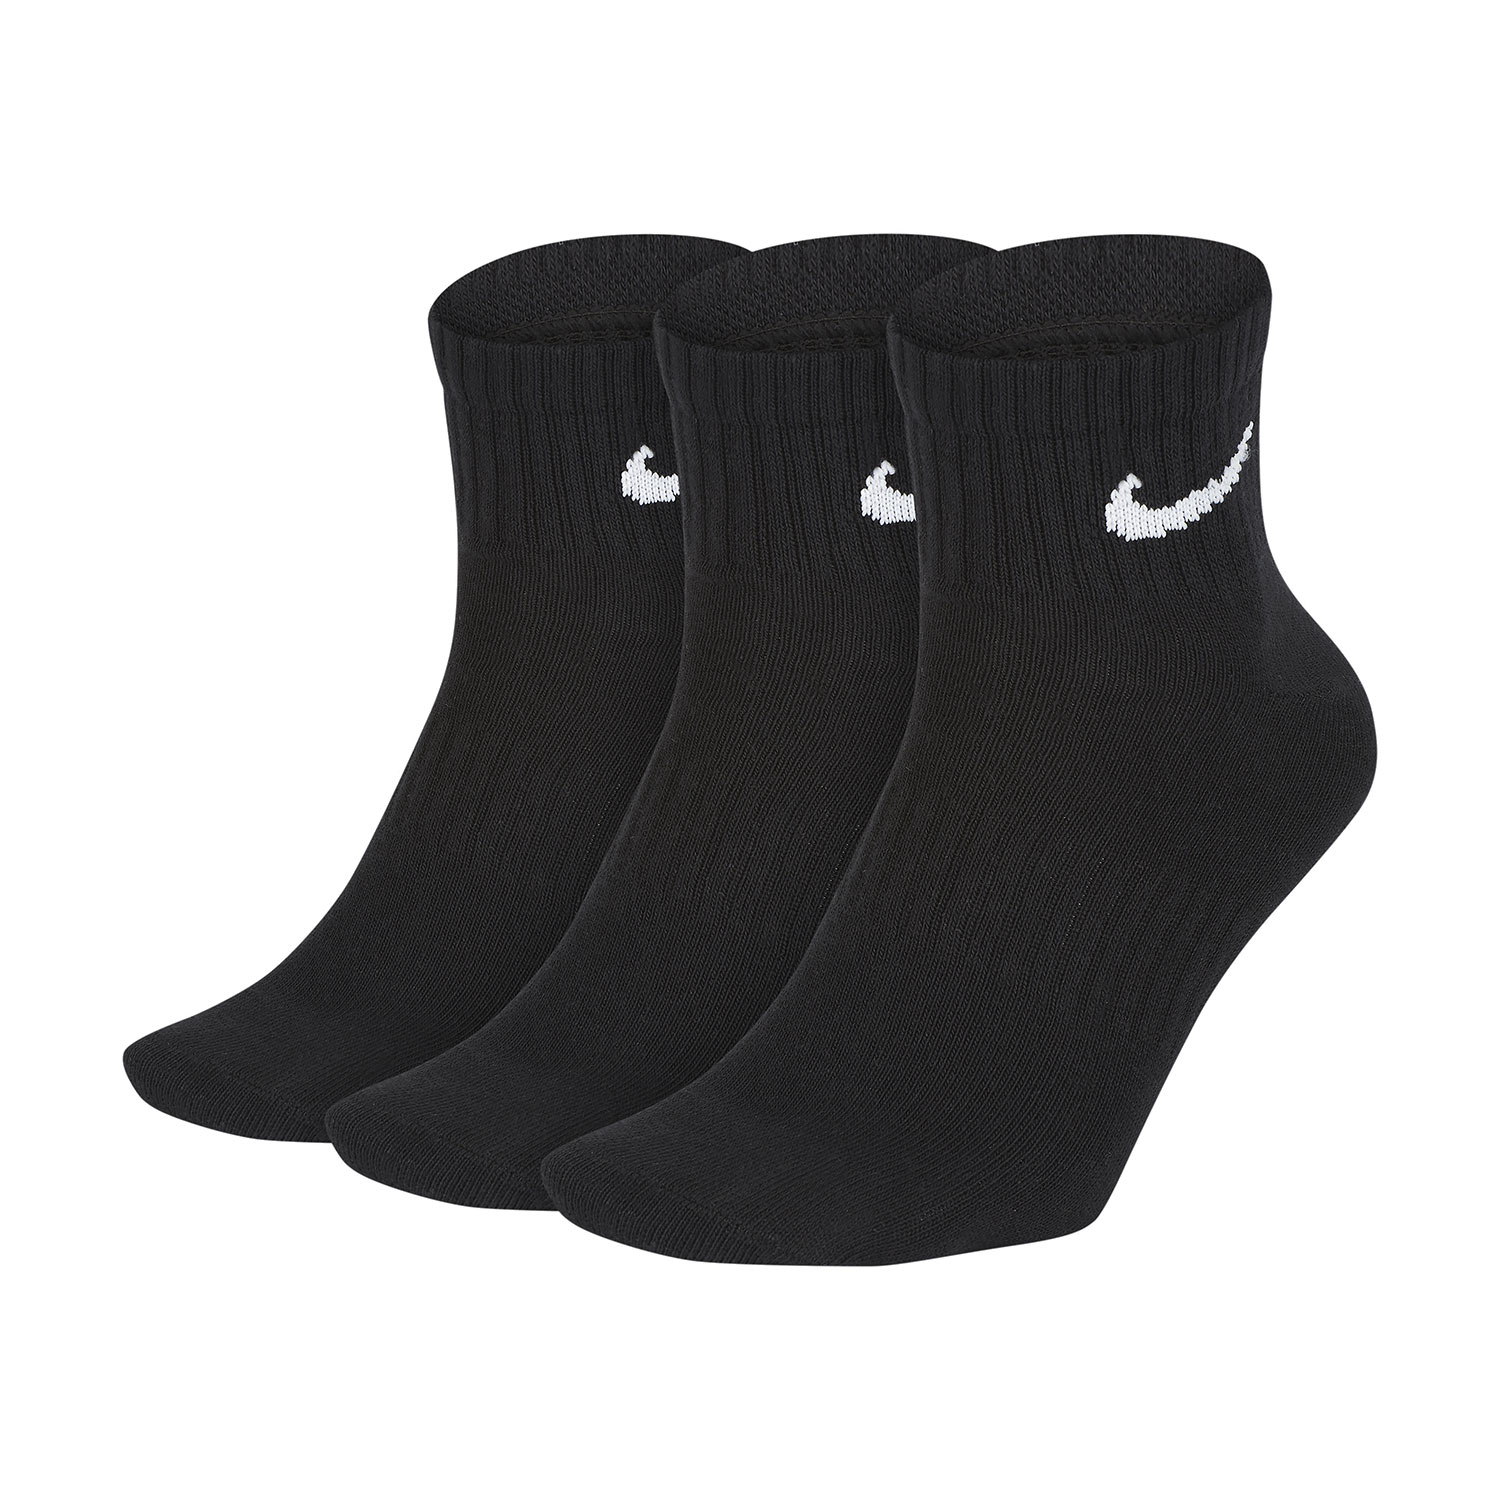 Nike Everyday Light Weight x 3 Socks - Black/White